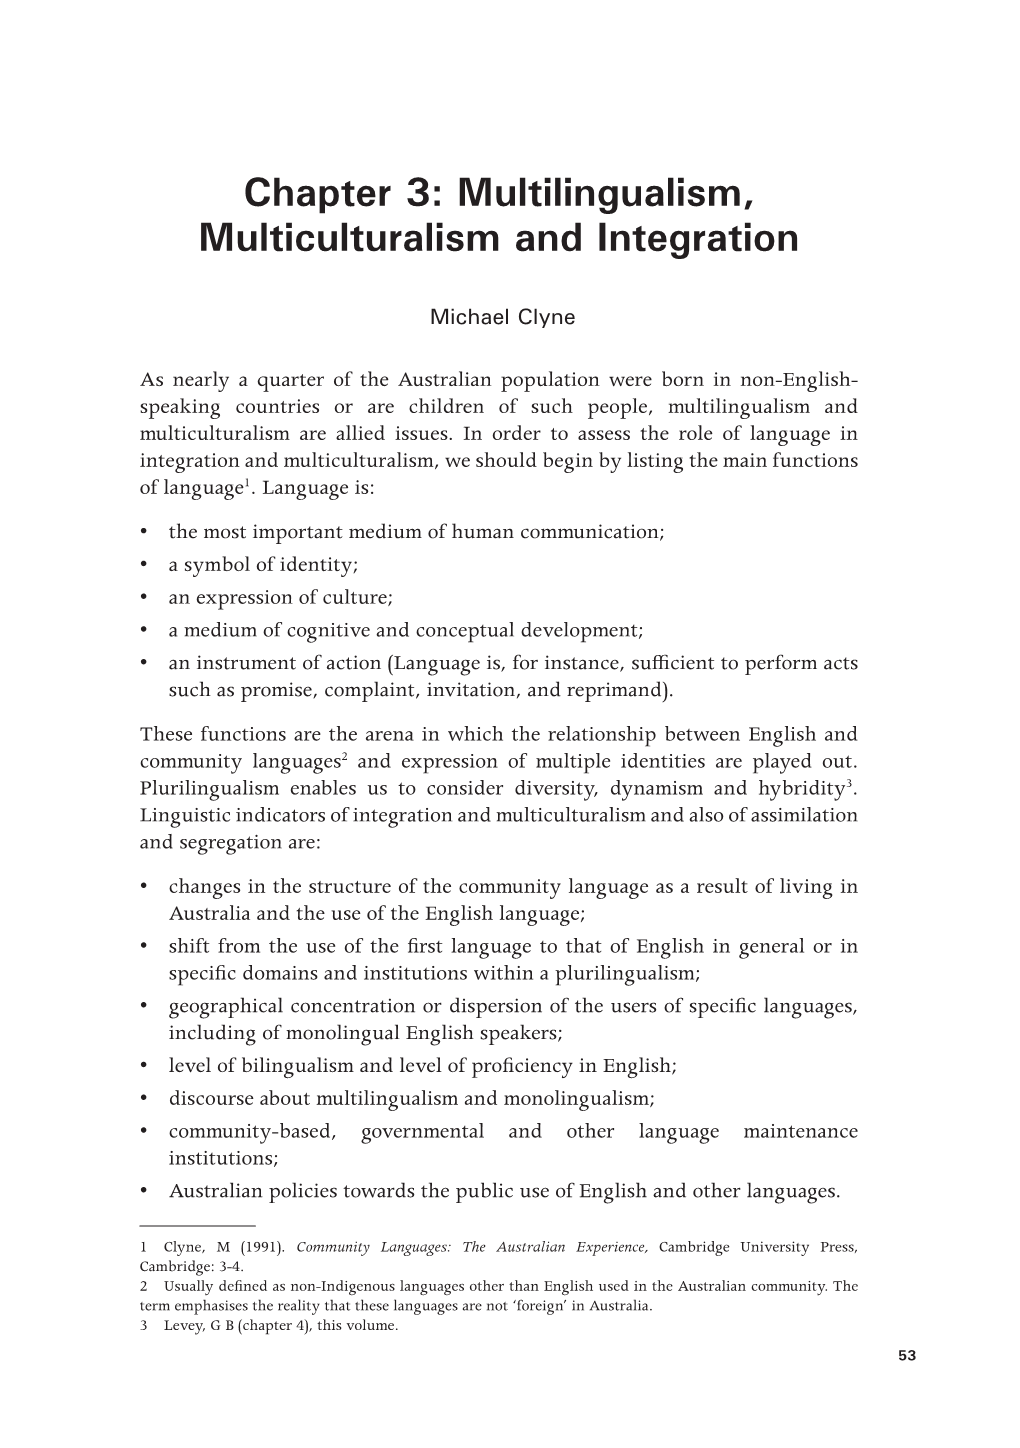 Chapter 3: Multilingualism, Multiculturalism and Integration